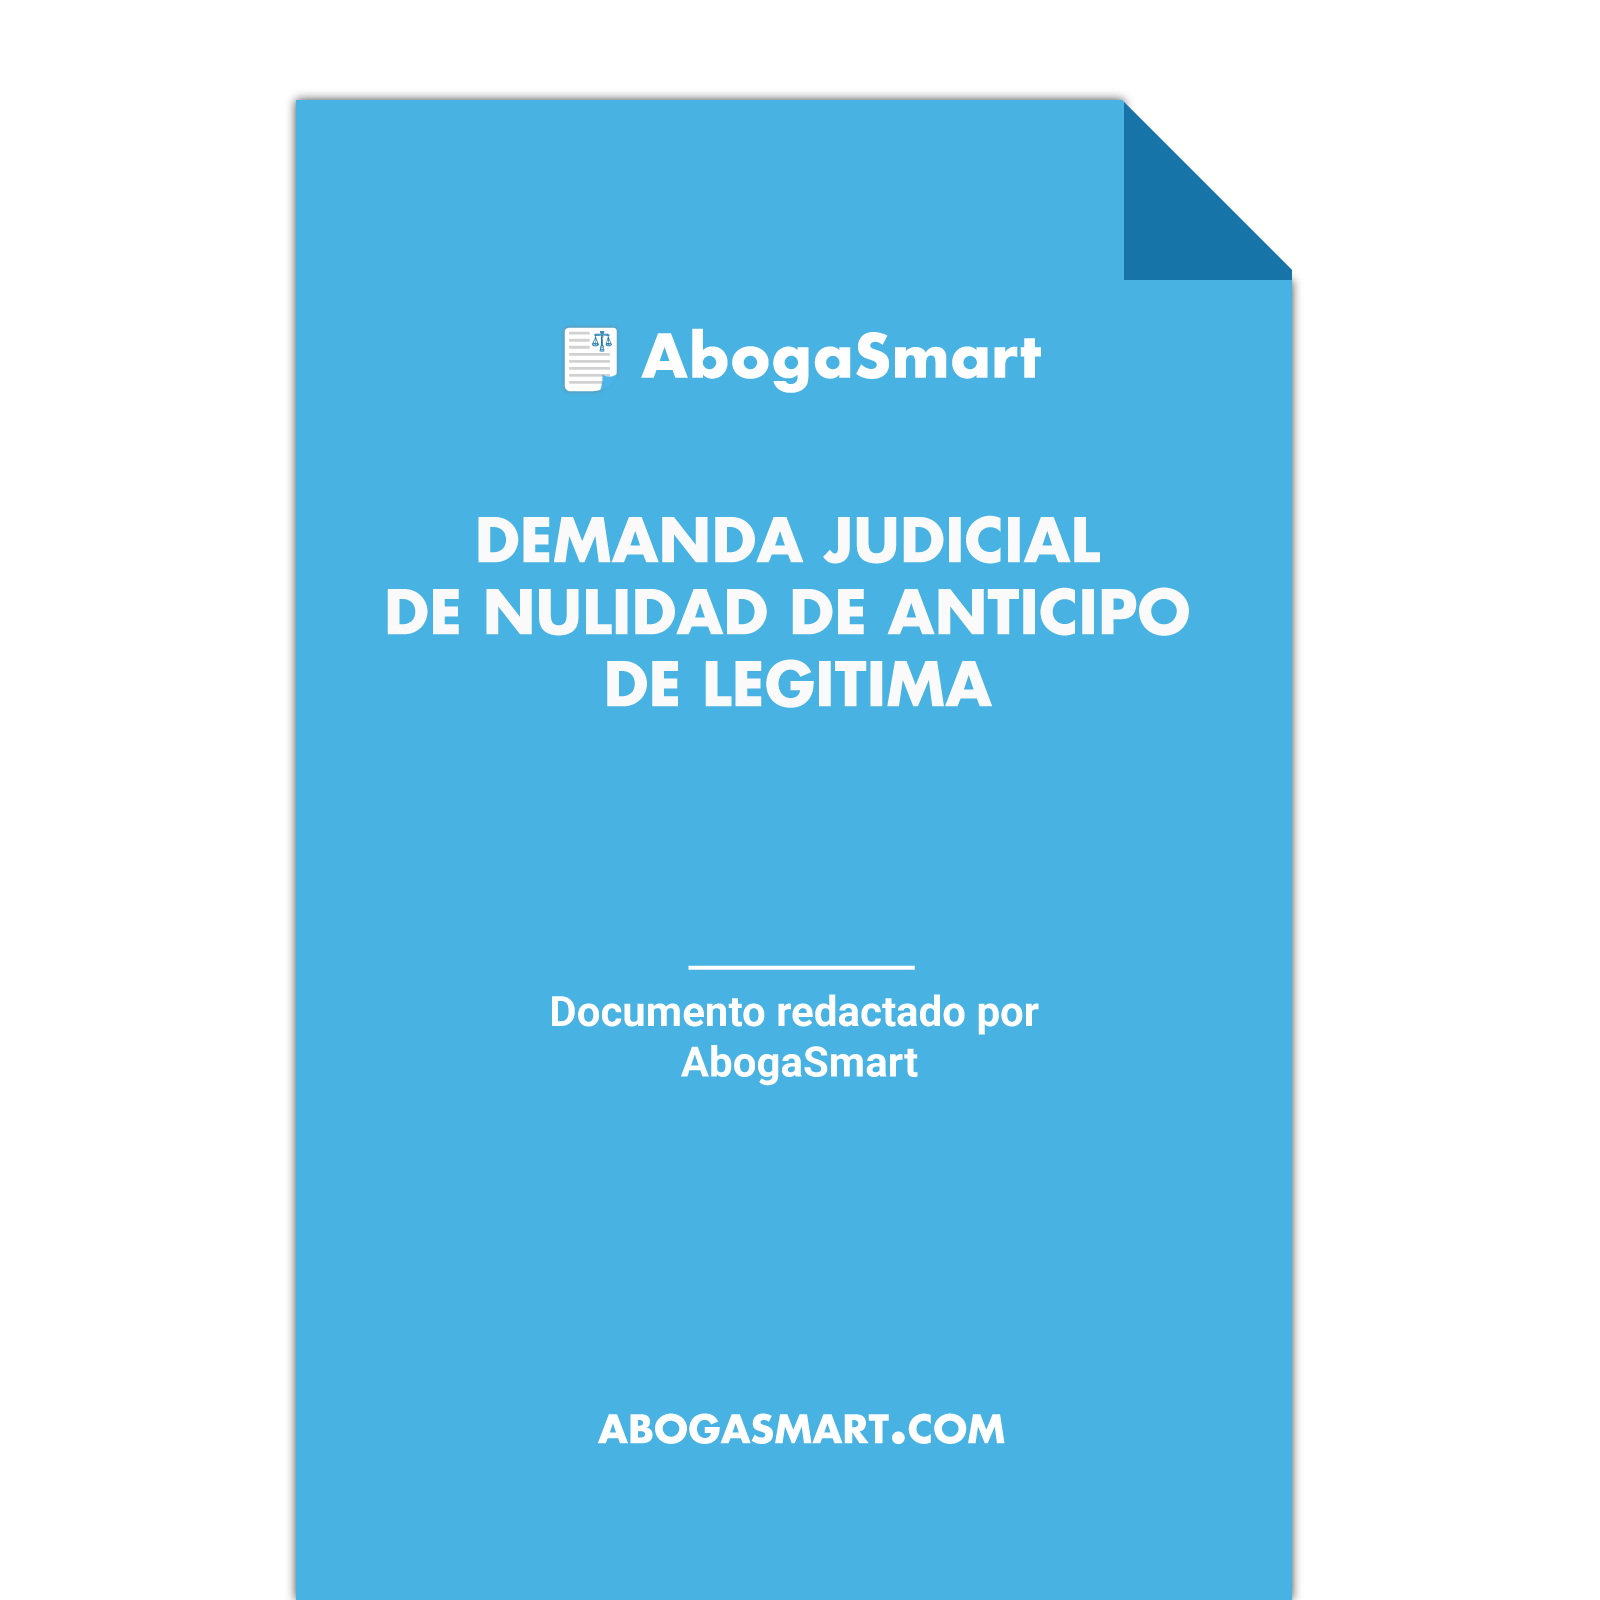 Demanda judicial de nulidad de anticipo de legitima - AbogaSmart